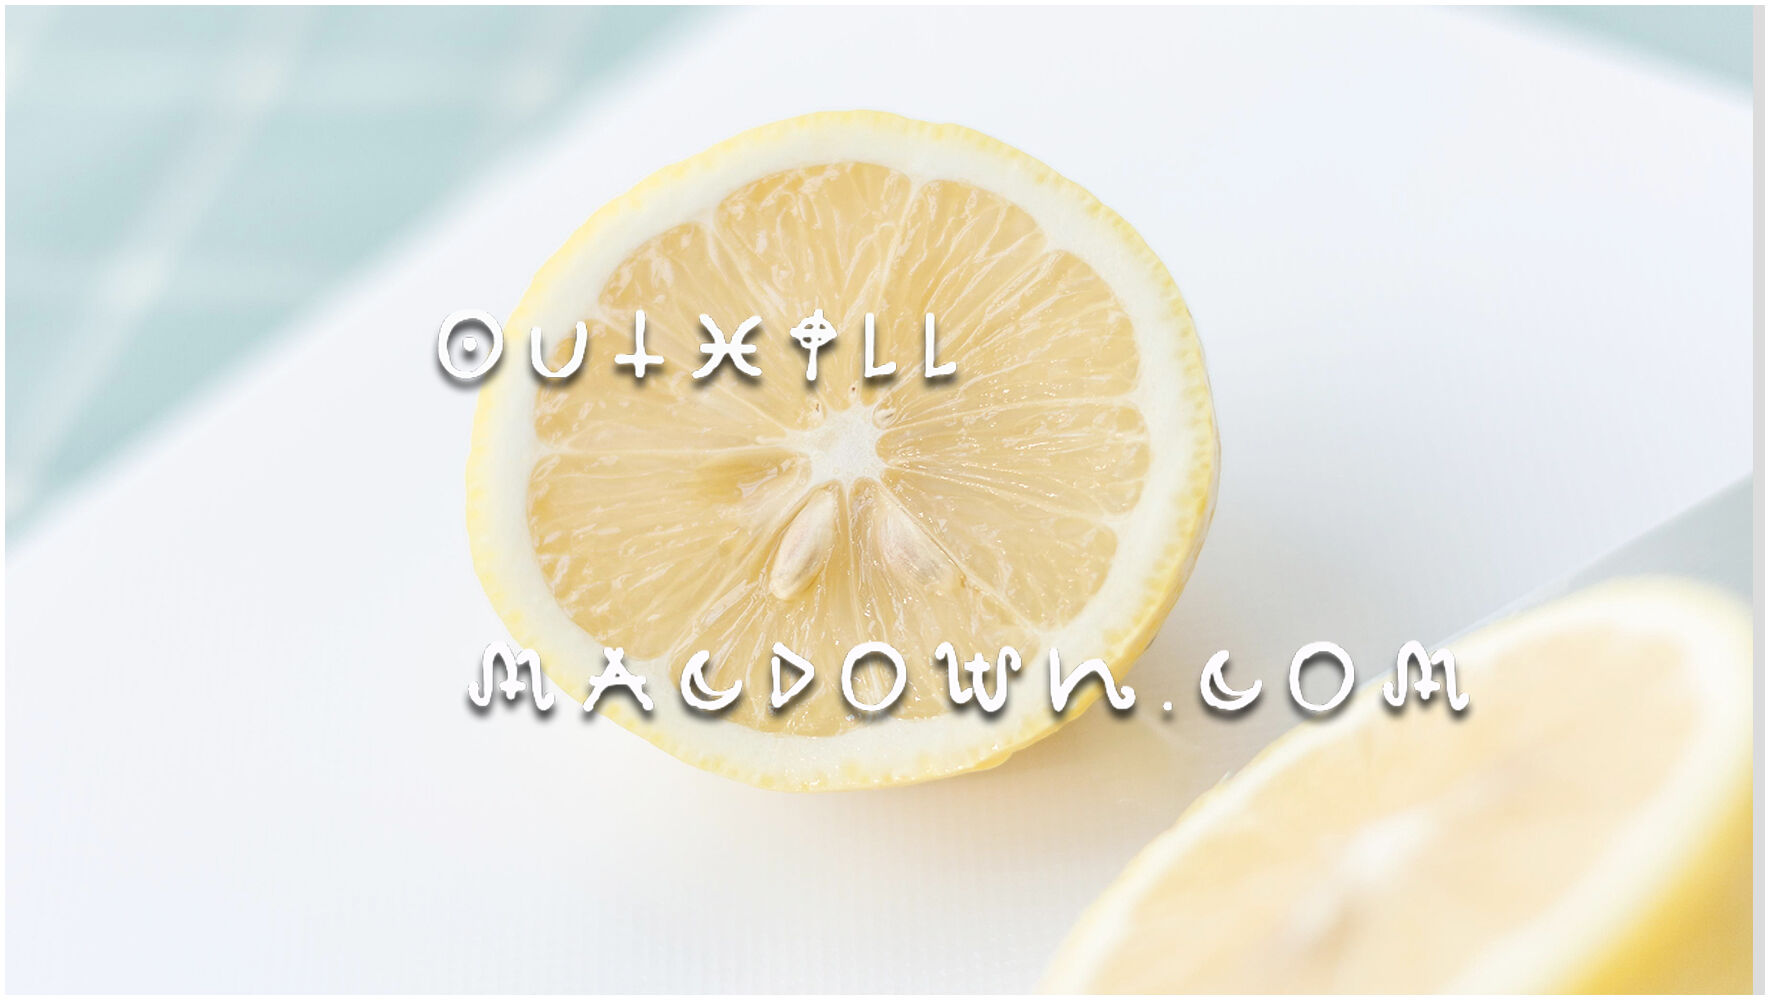 Outhill神秘怪异艺术设计字体 for mac